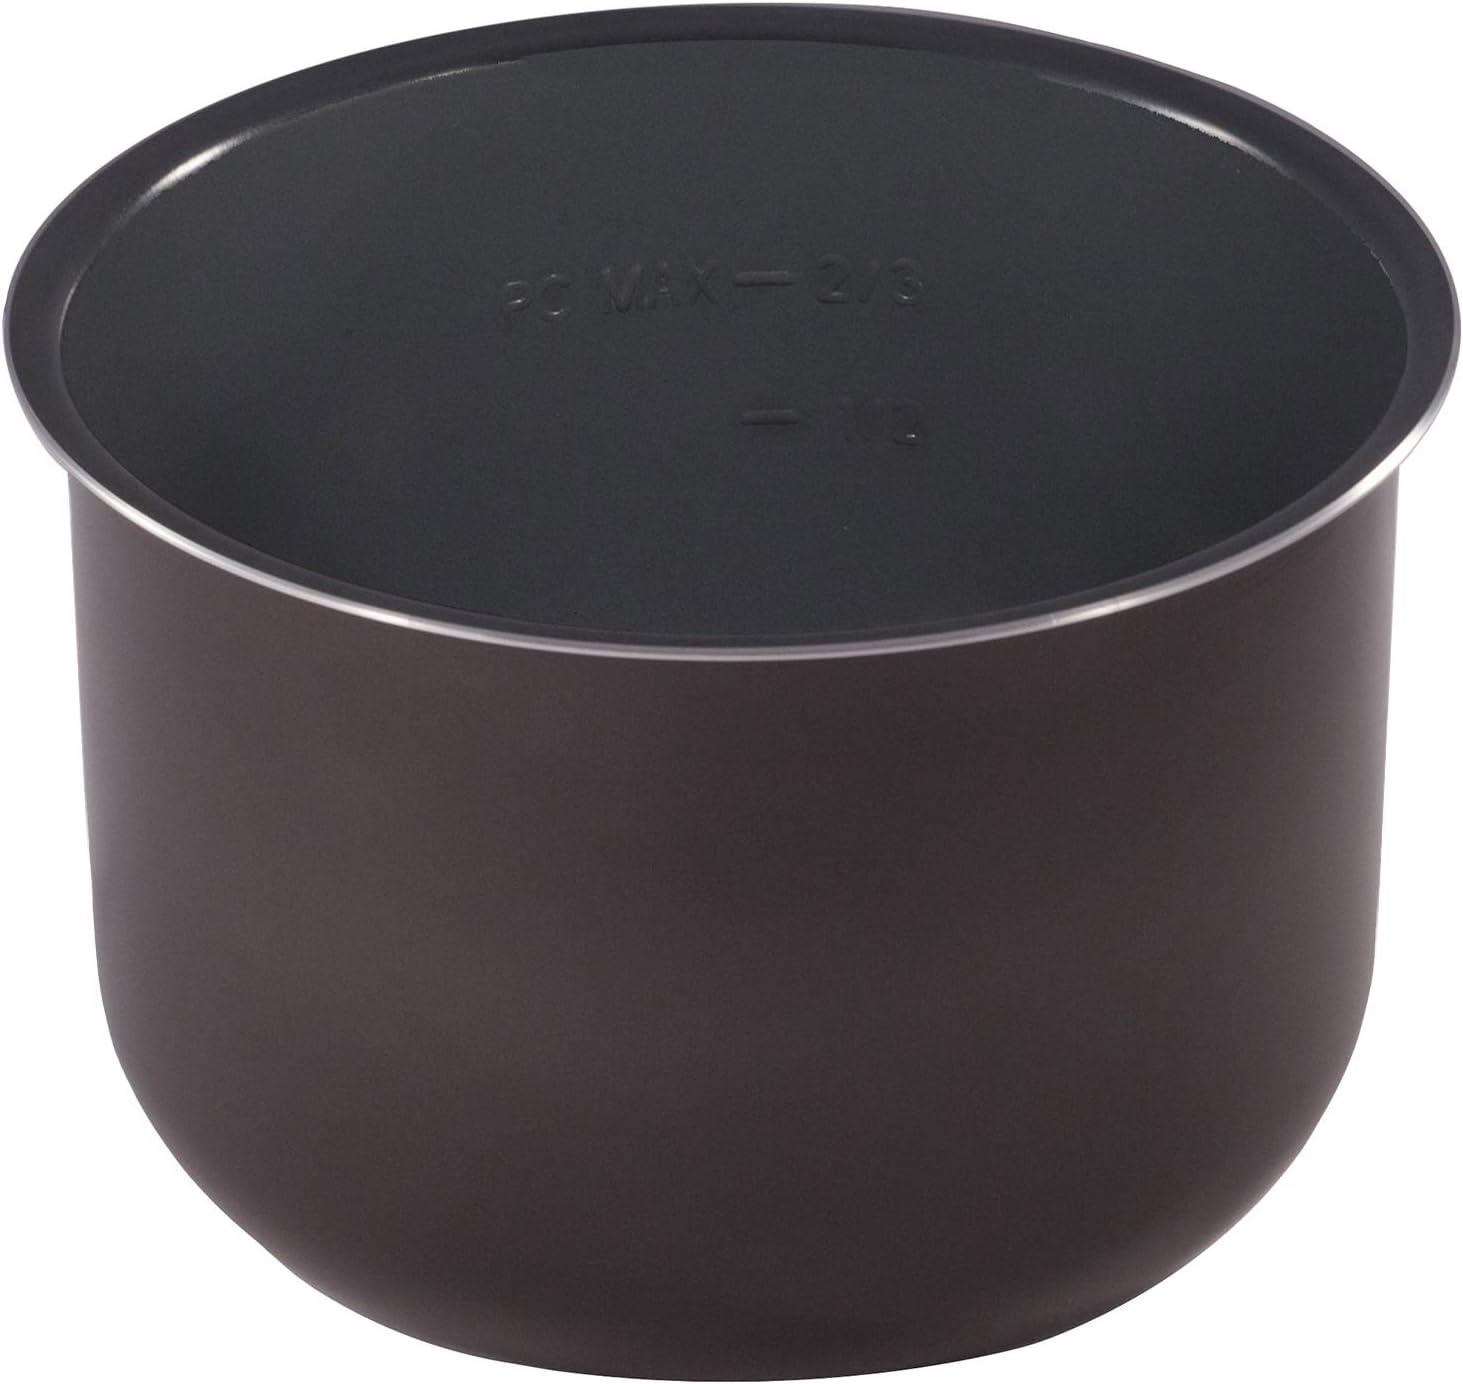 Instant Pot 6-Quart Pressure Cookers Ceramic Inner Cooking Pot for $15.99